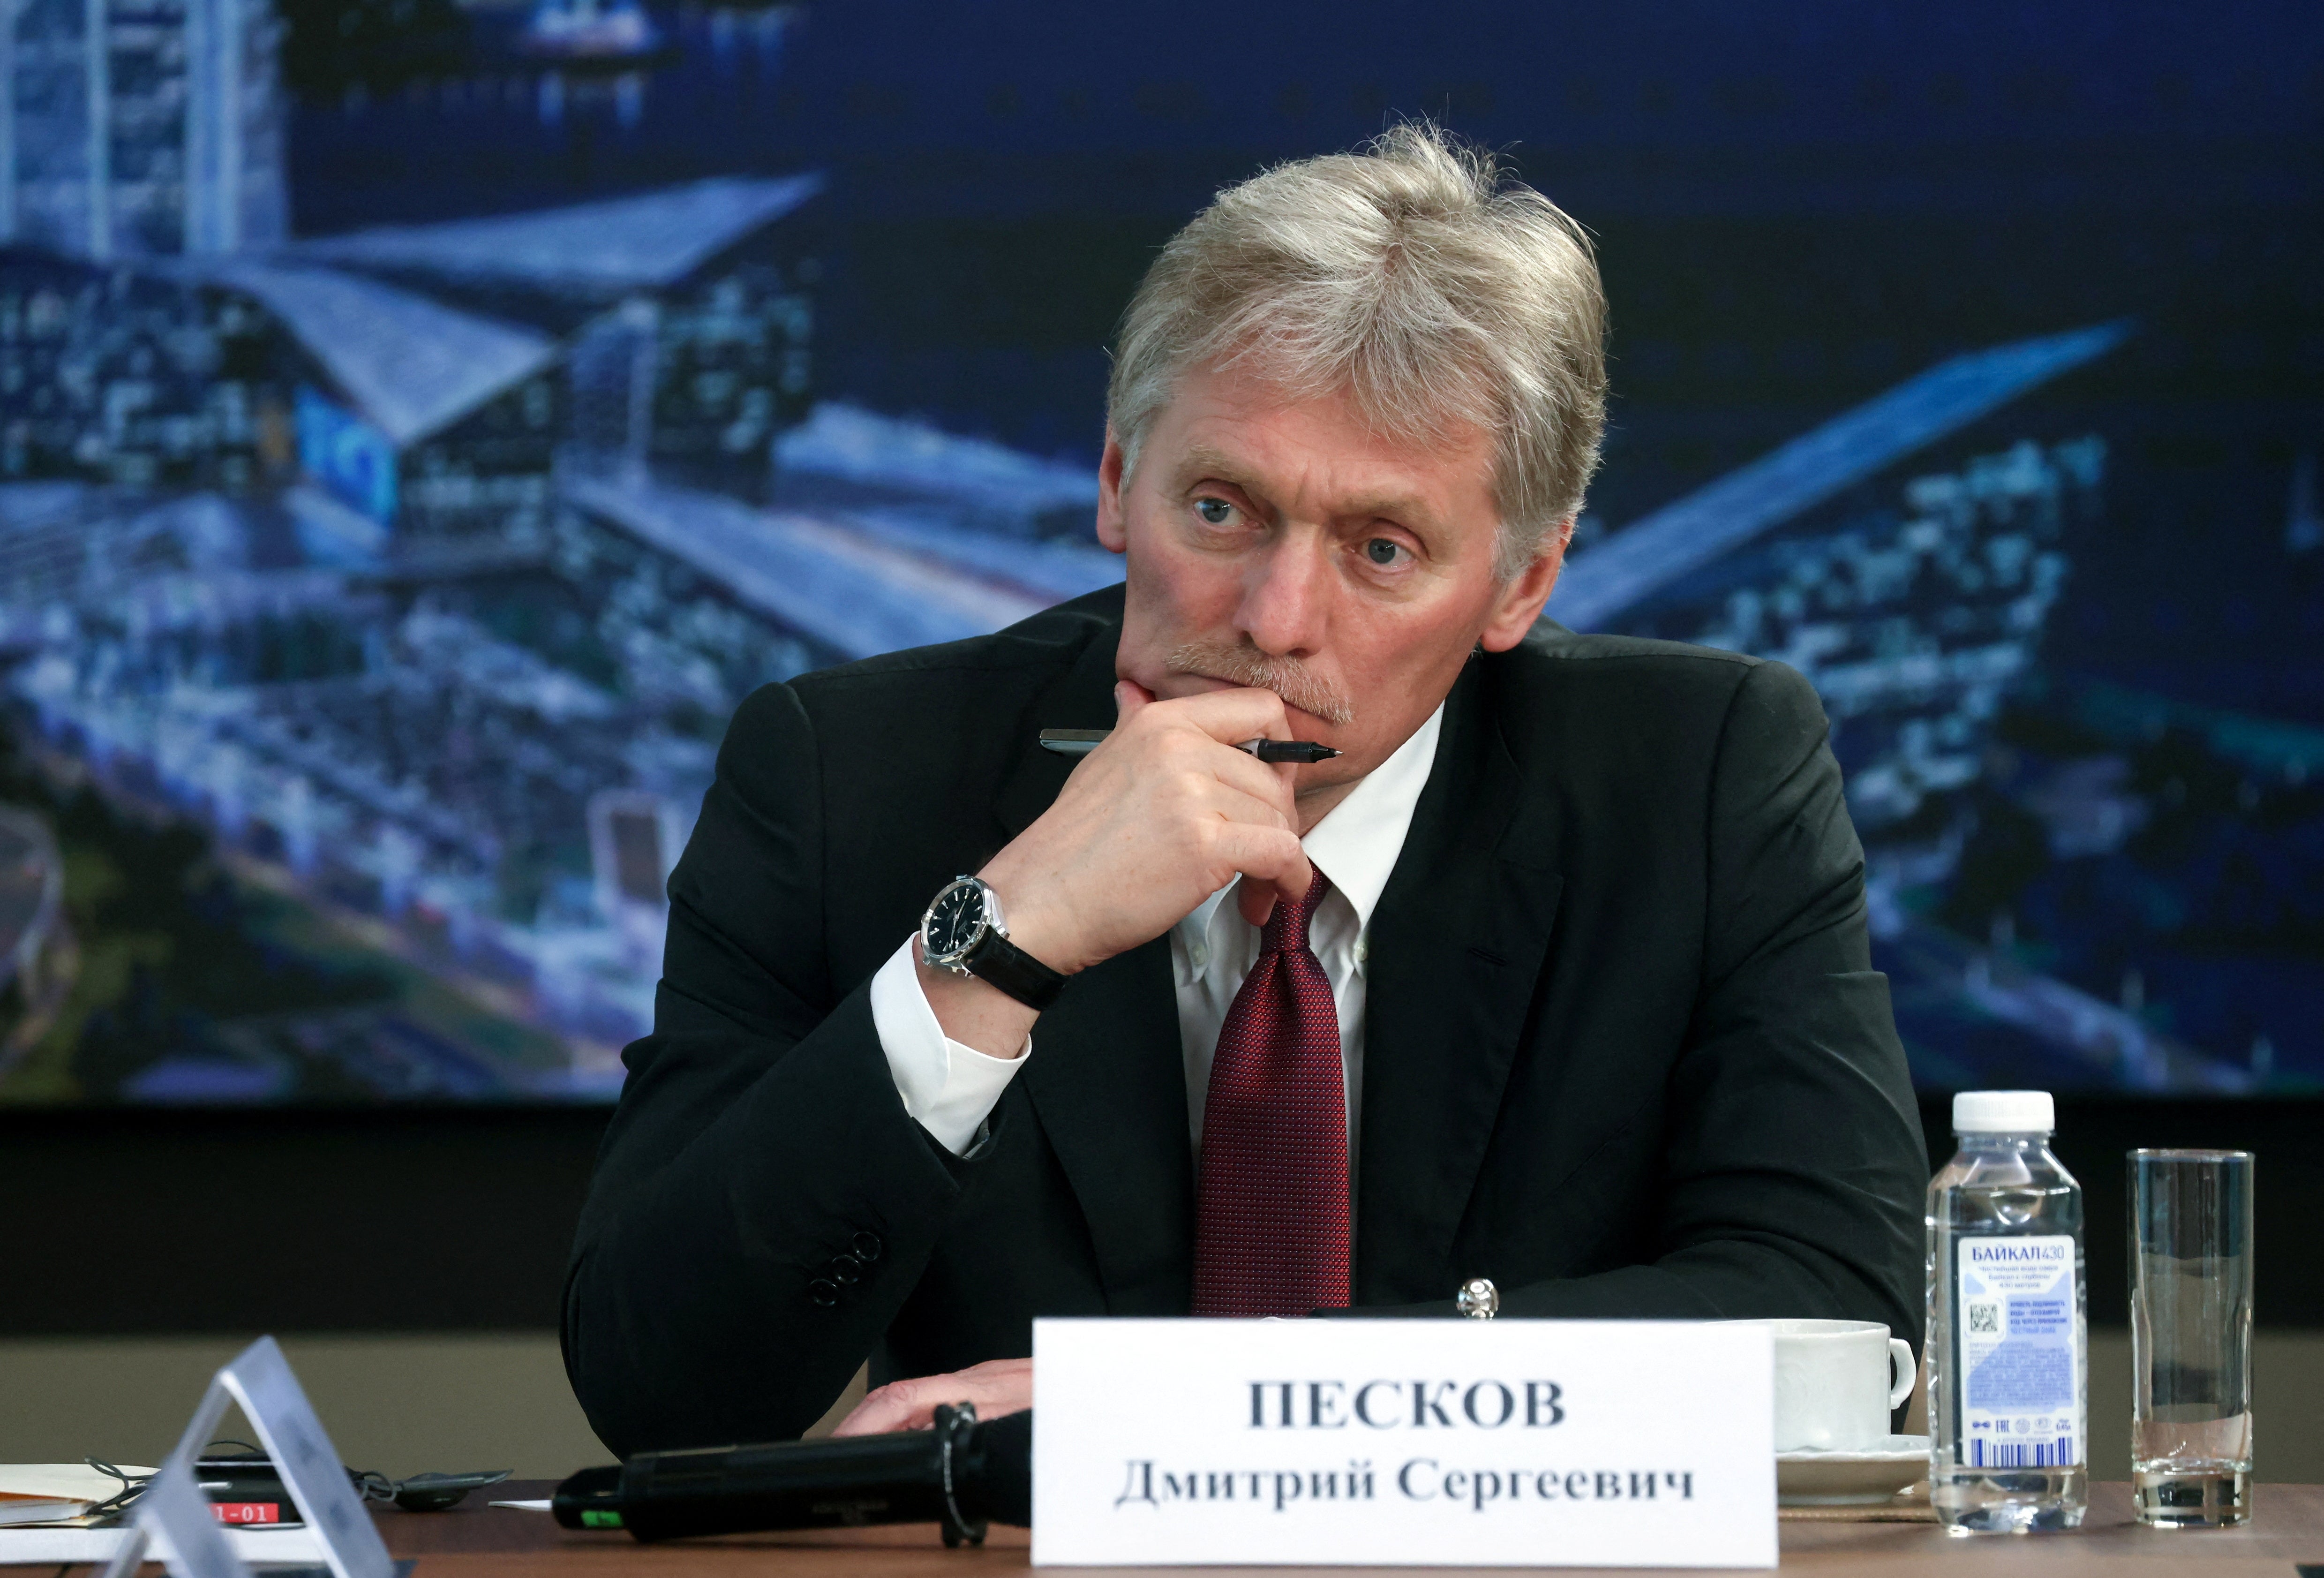 Mluvčí Kremlu Dmitrij Peskov hovořil s novináři začátkem tohoto roku